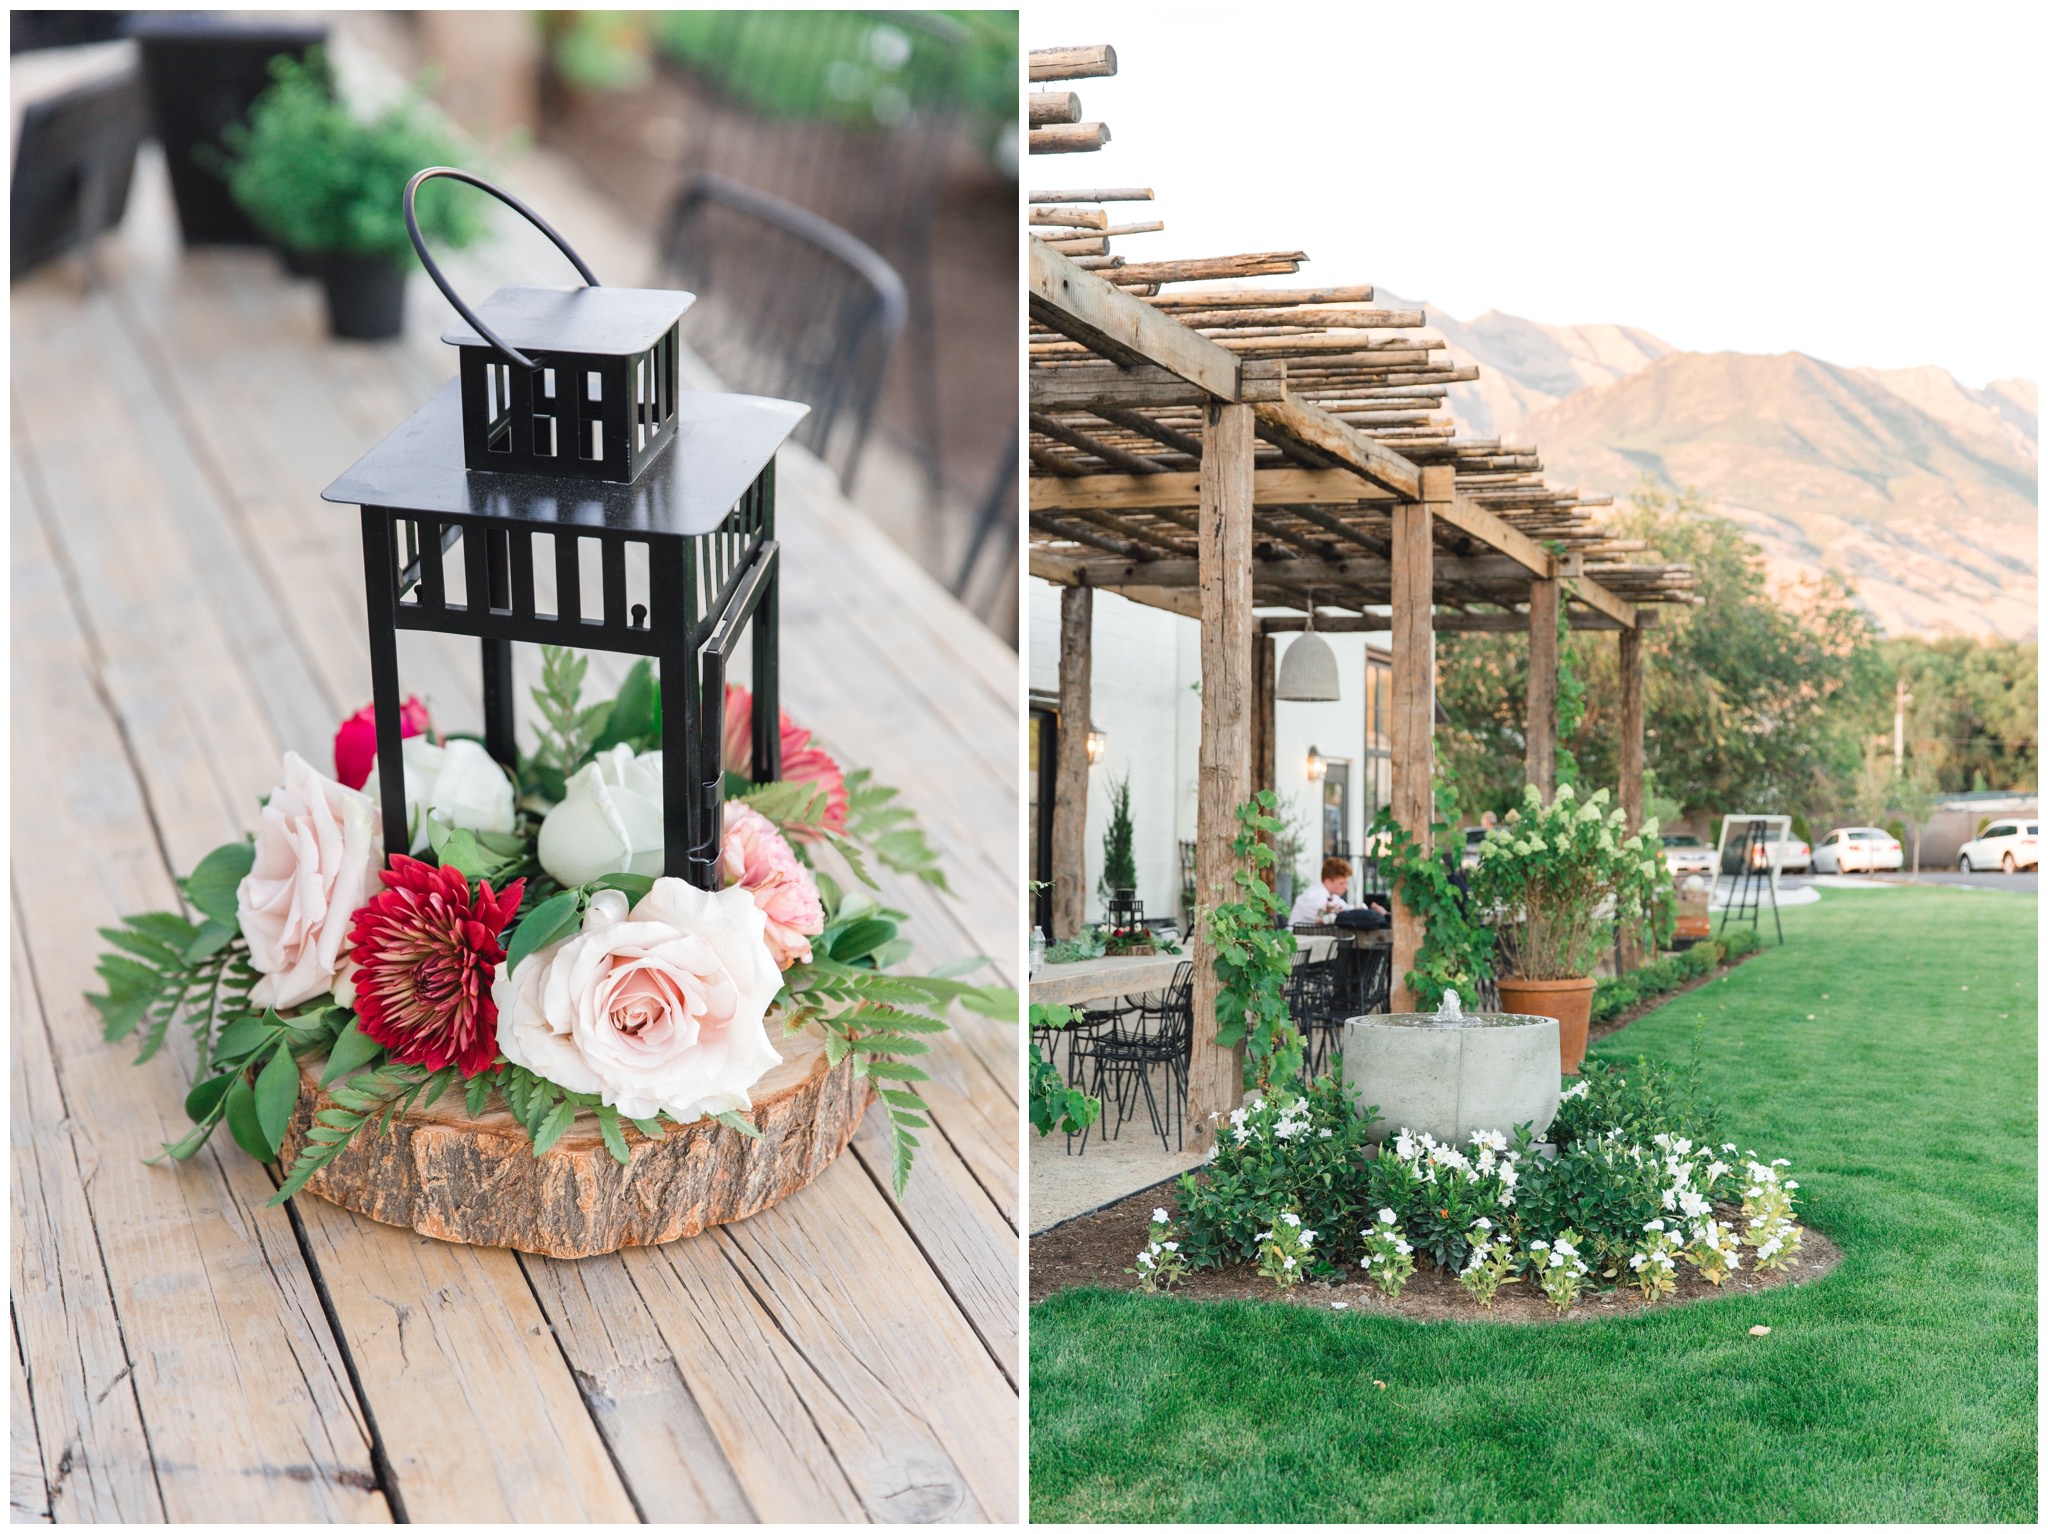 Wedding details of burgundy and deep red floral arrangements at wedding in Utah